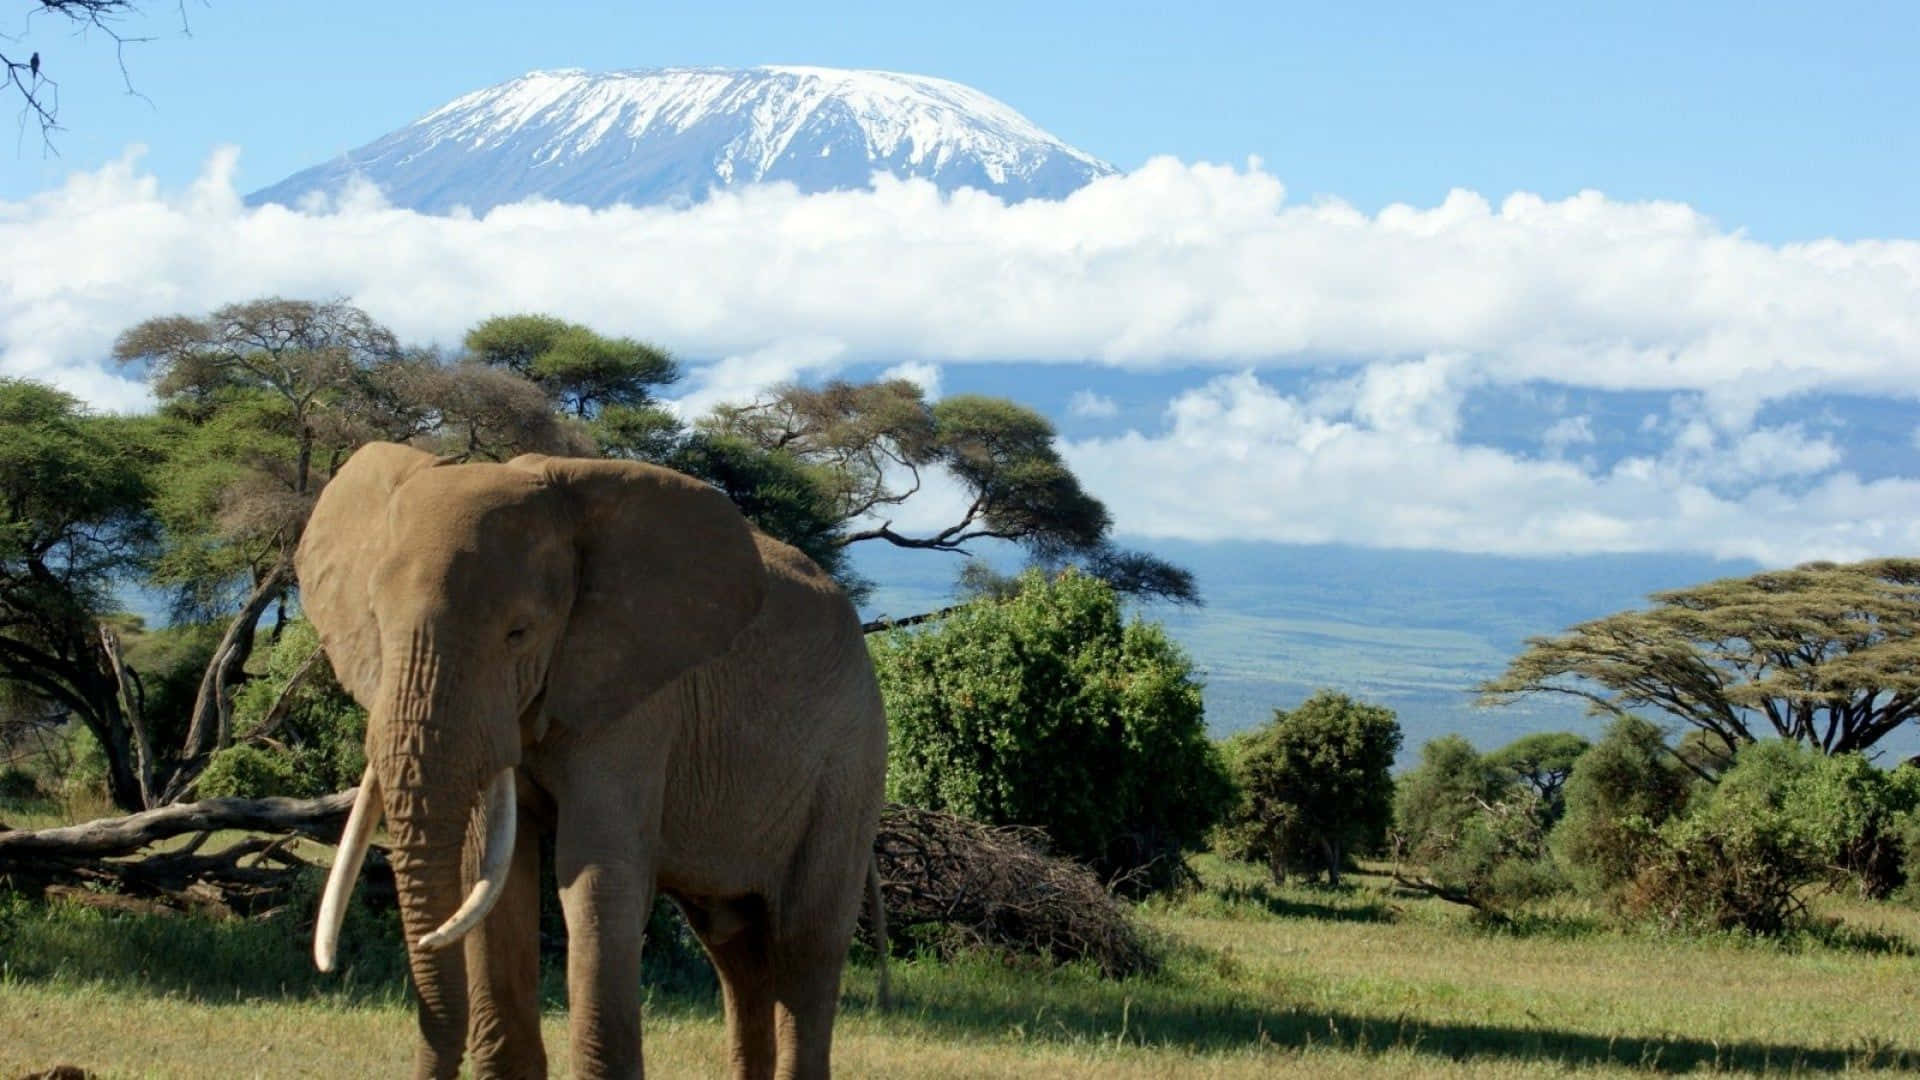 Big Elephant In Mount Kilimanjaro Wallpaper